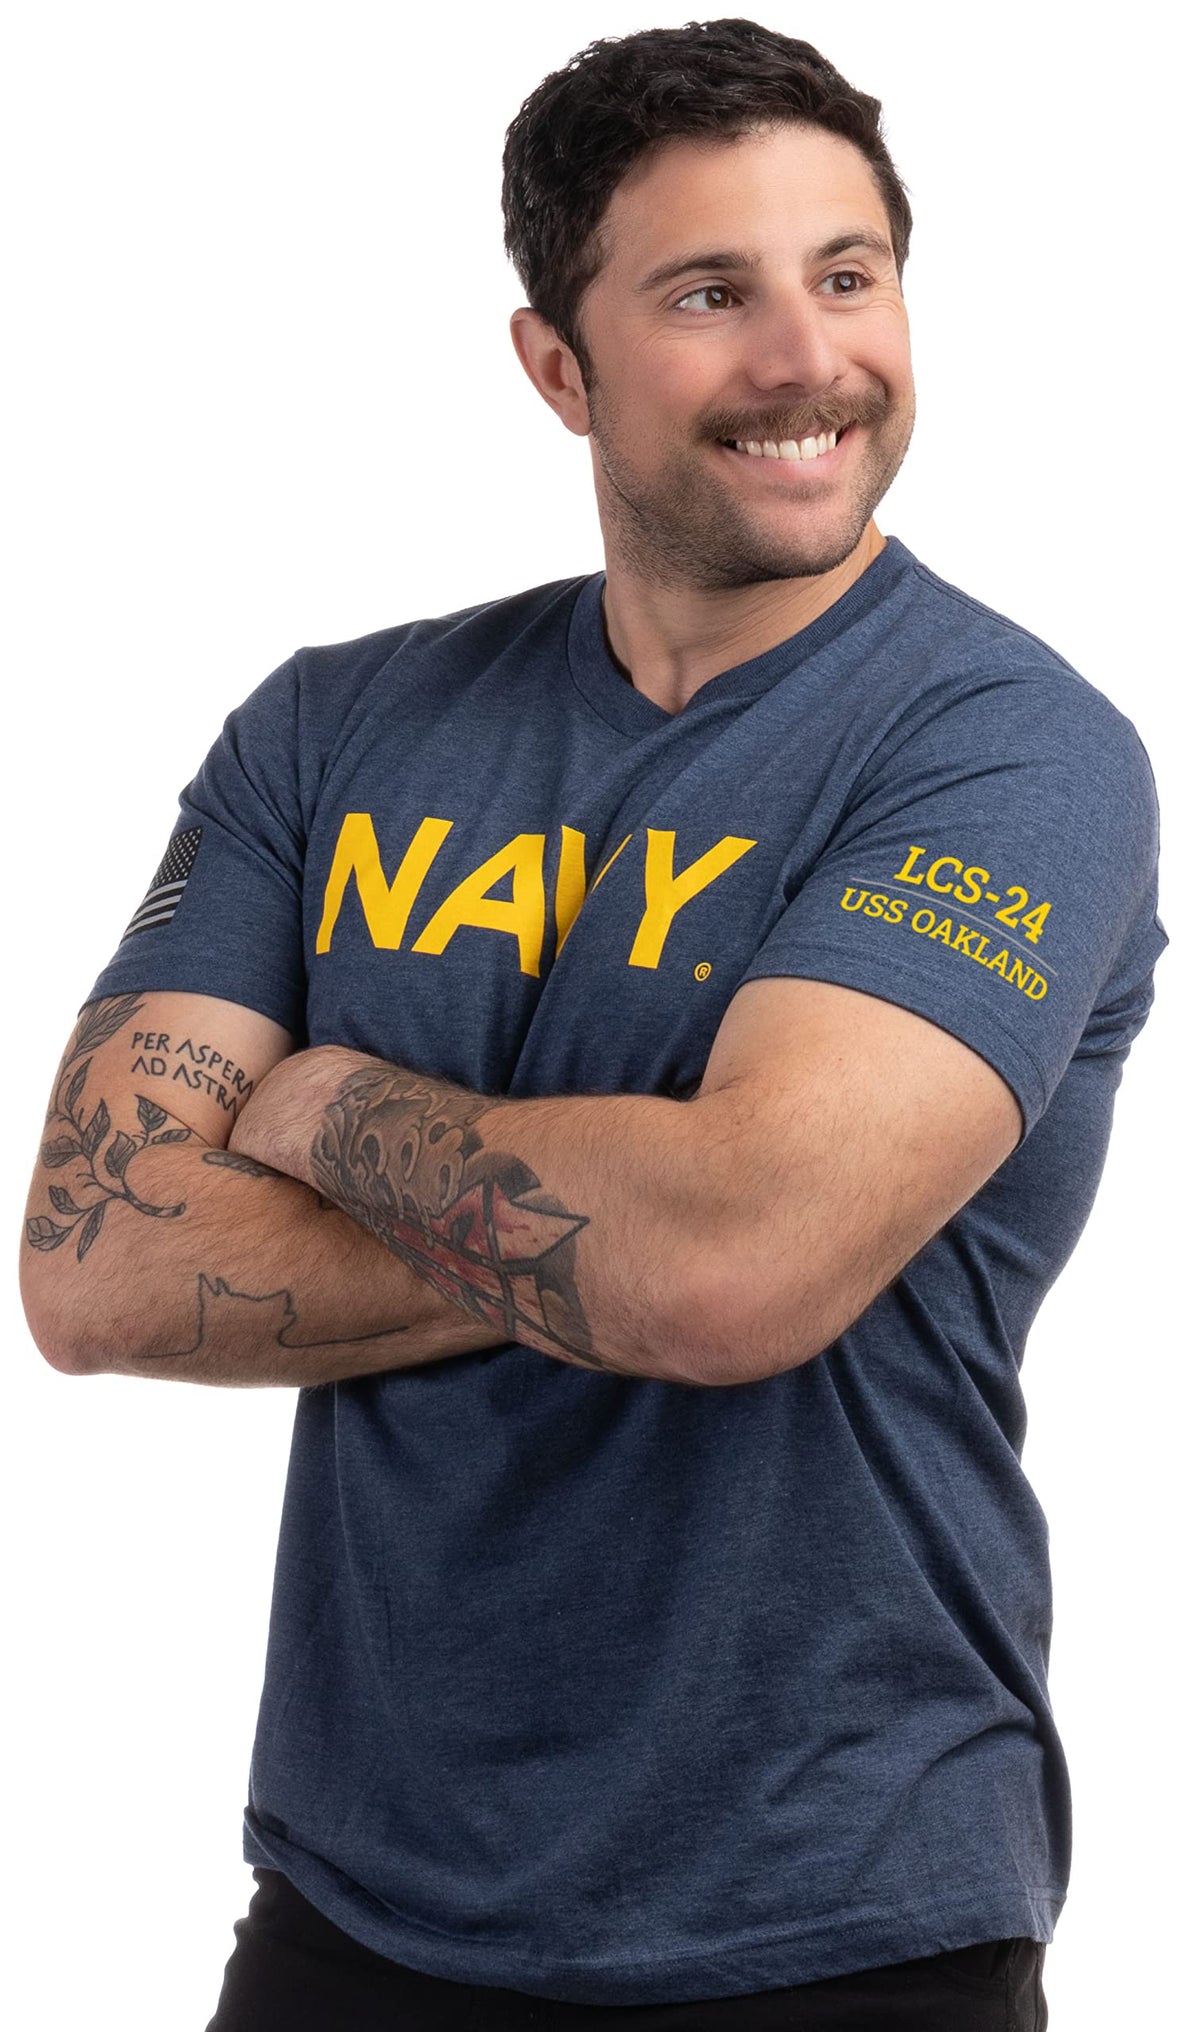 USS Oakland, LCS-24 | U.S. Navy Sailor Veteran USN United States Naval T-shirt for Men Women